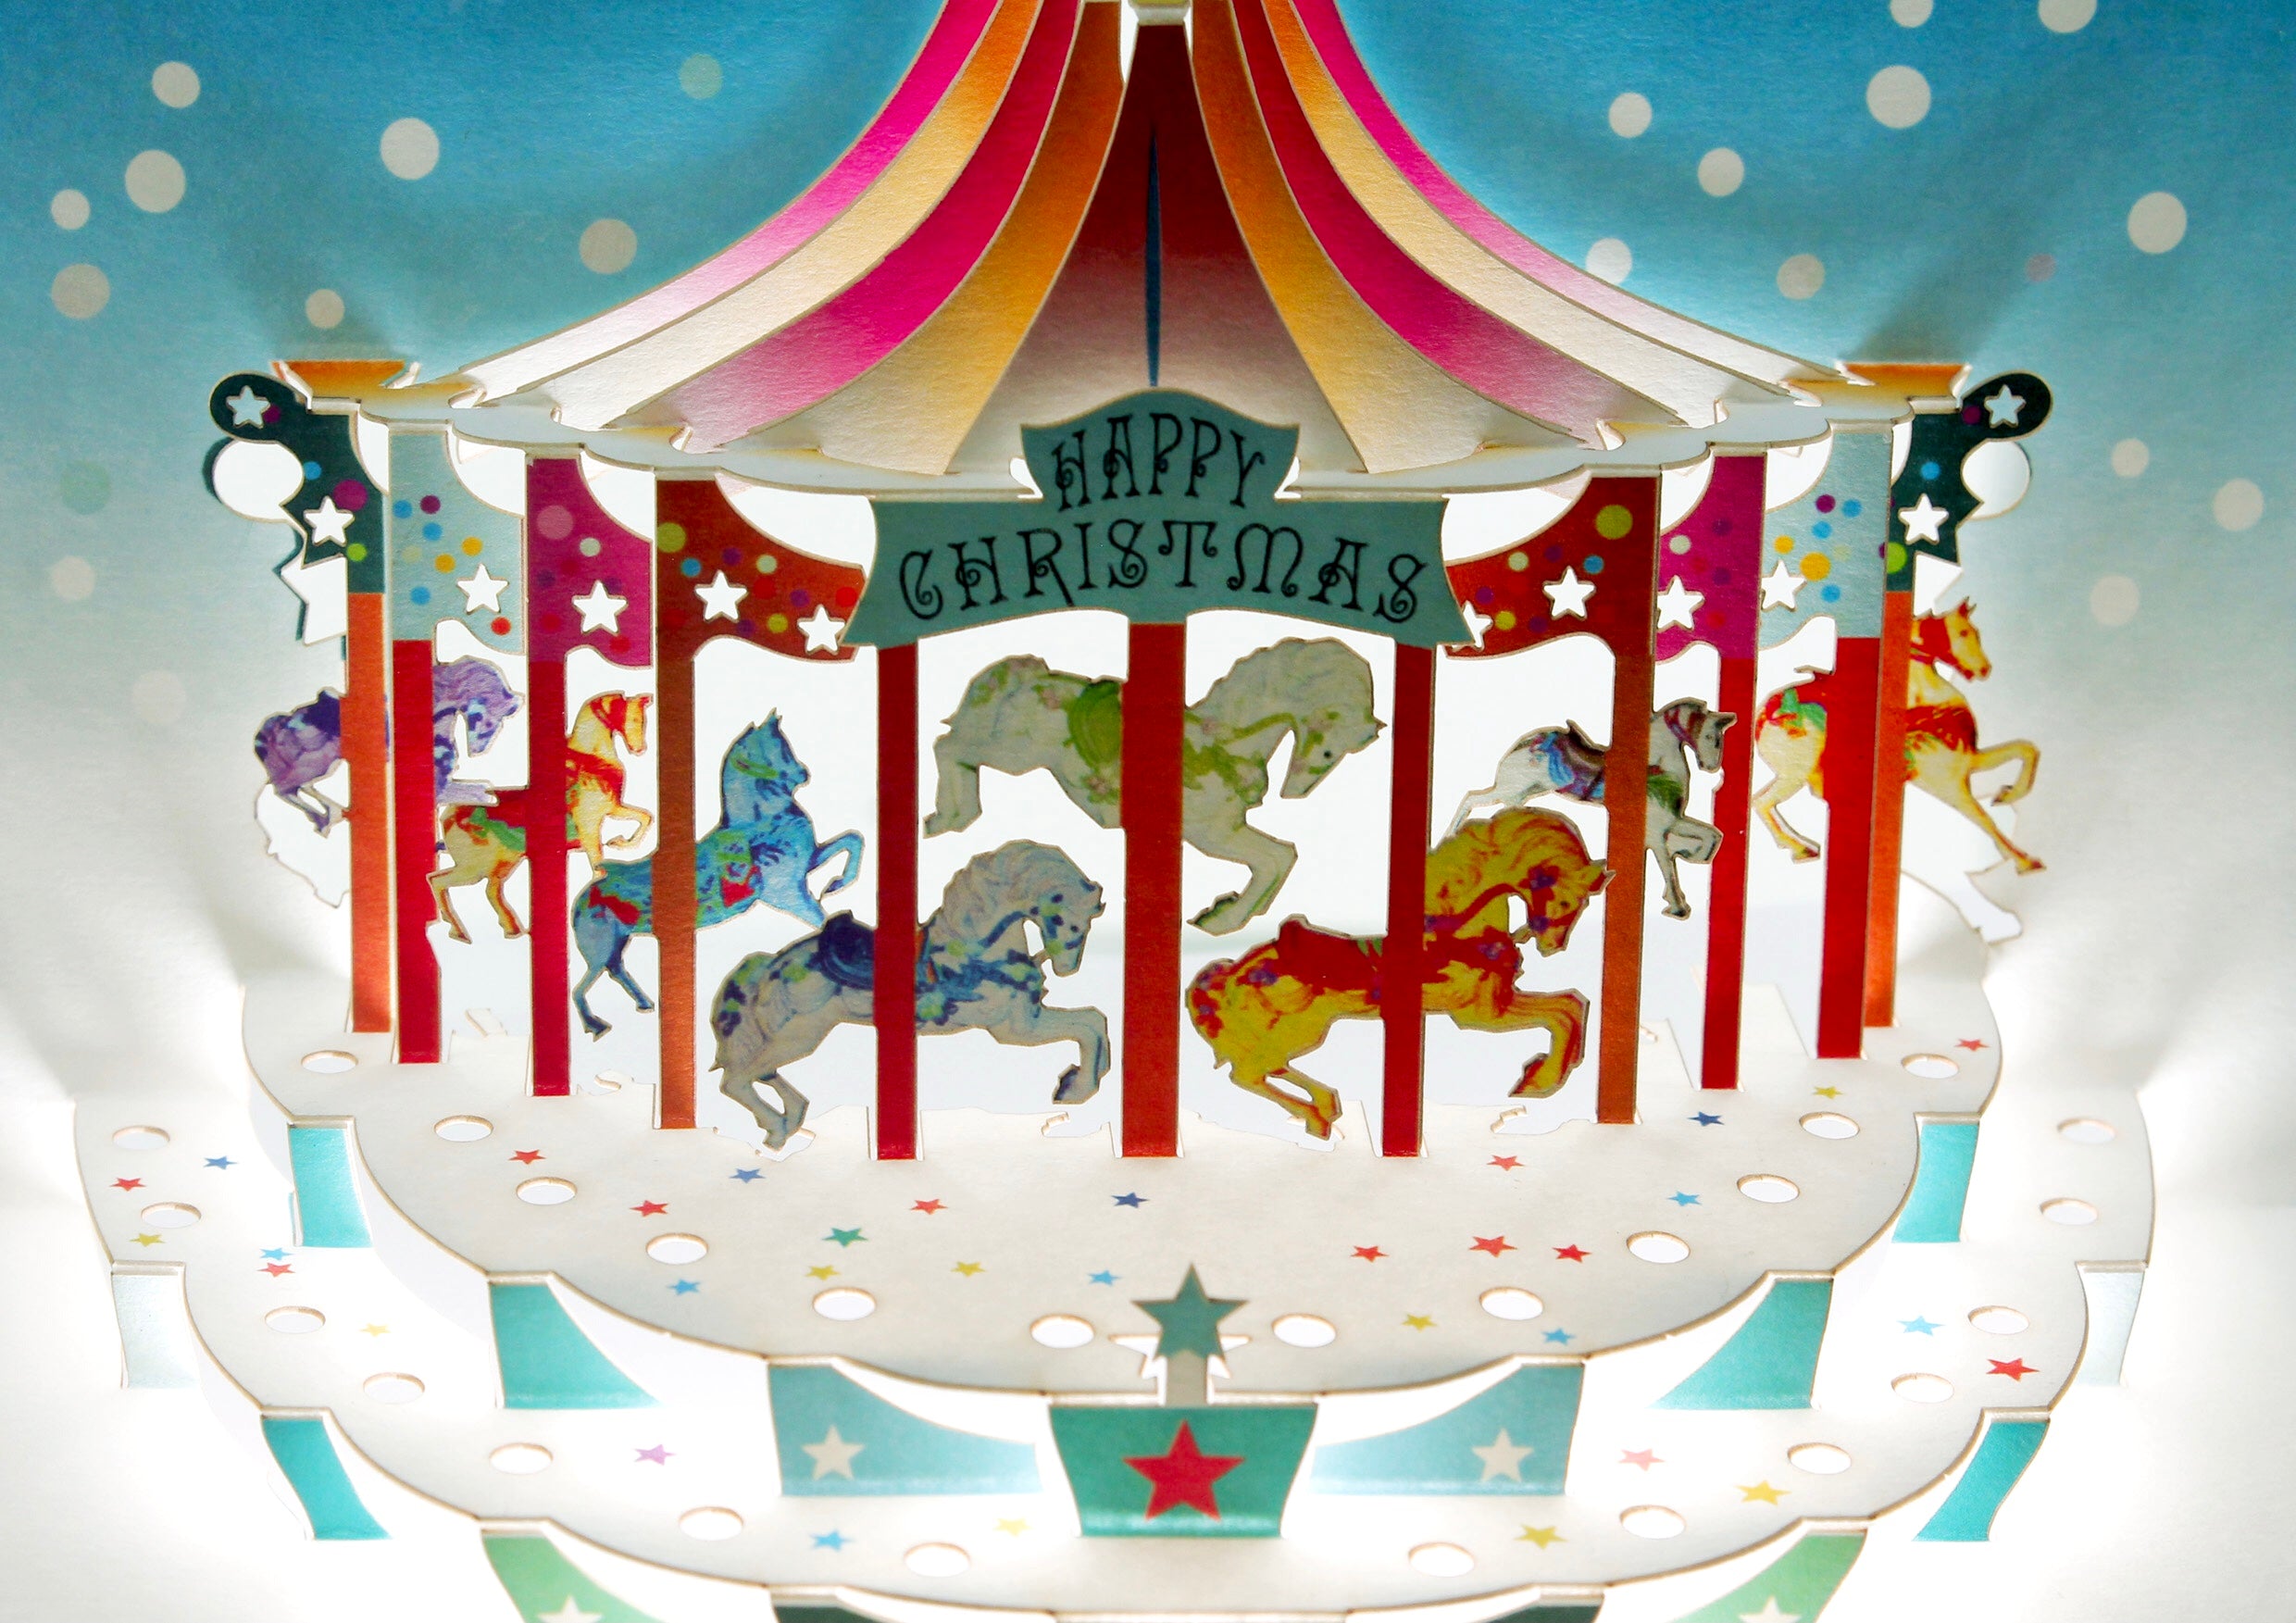 3D Christmas Carousel Festive Fairground Pop up Greeting Card